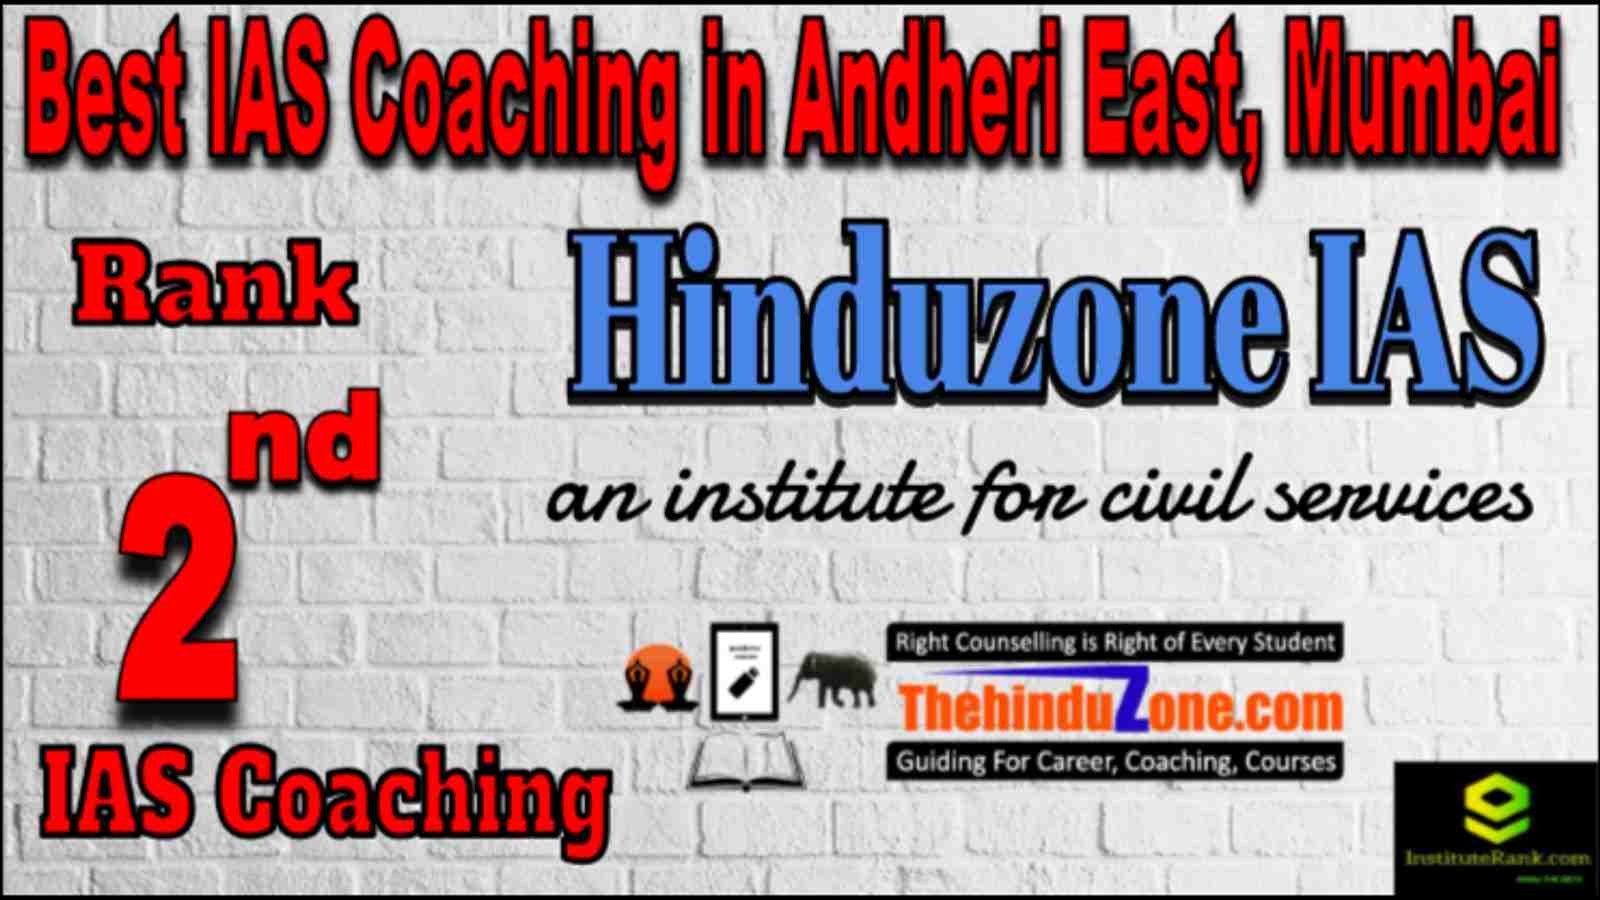 Rank 2 Best IAS coaching in Andheri East, Mumbai